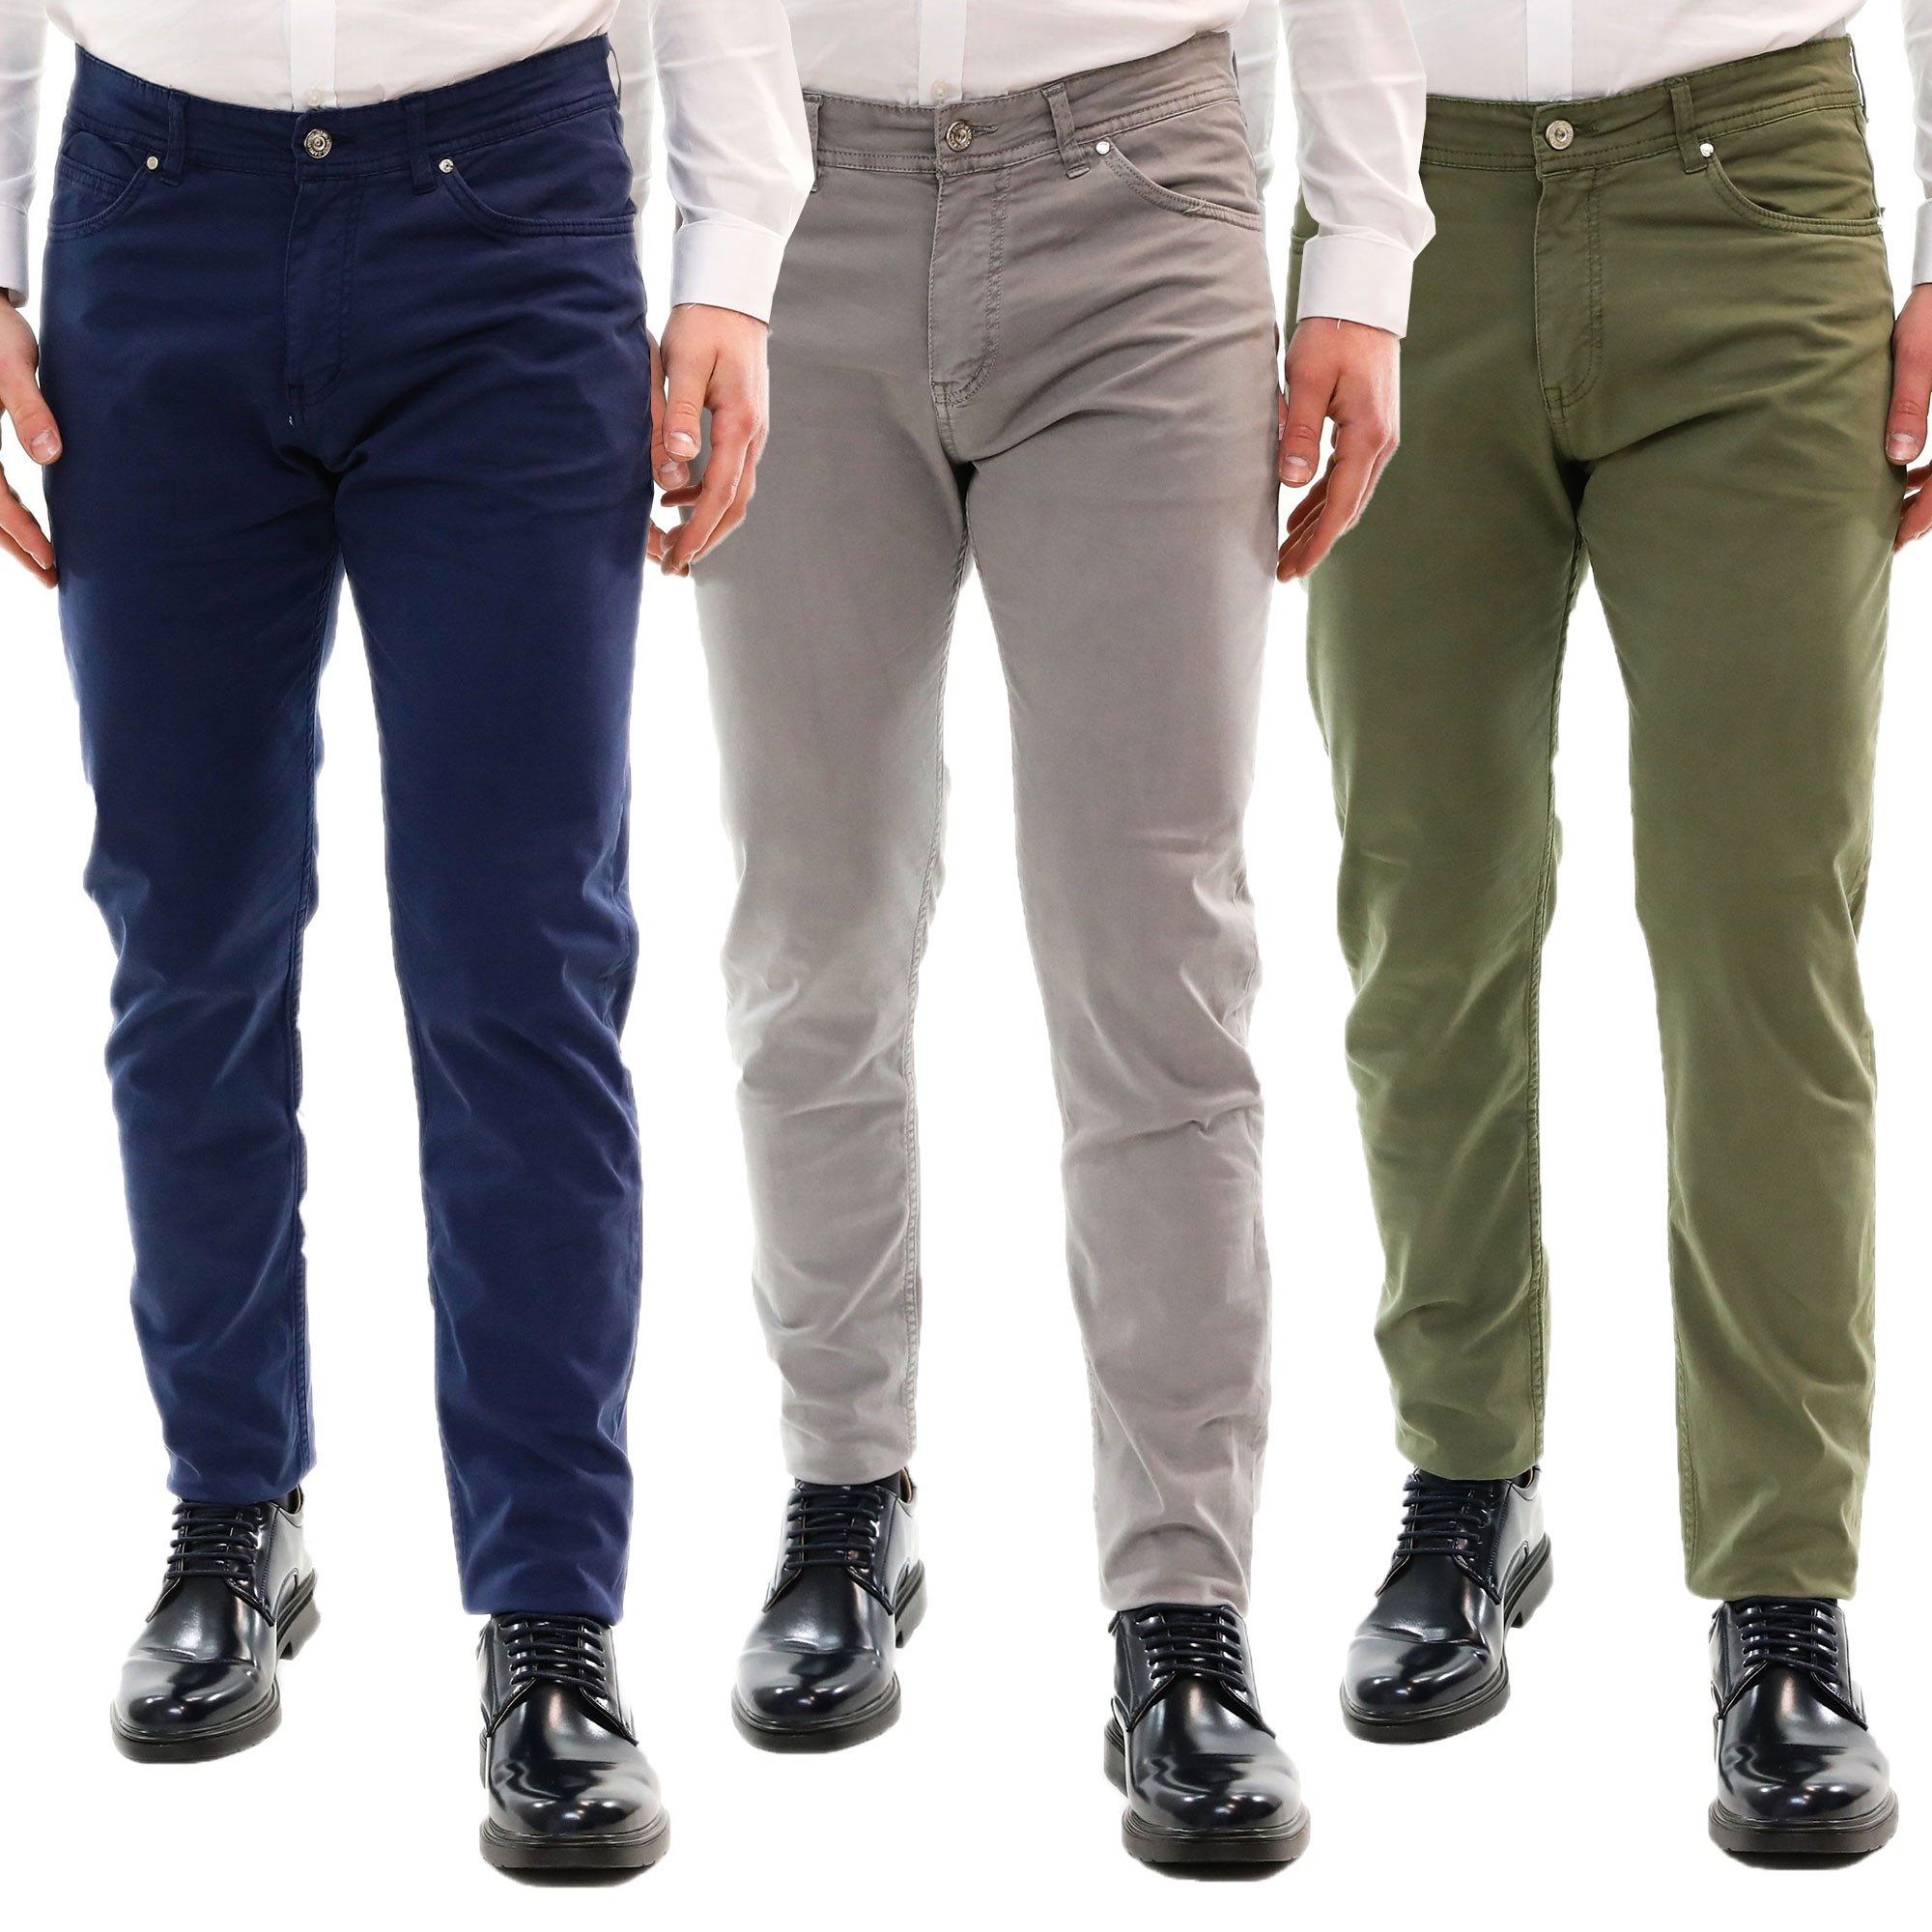 Men's Pants Slim Fit Chino Summer Light Cotton Stylish Casual 5 Pockets ...